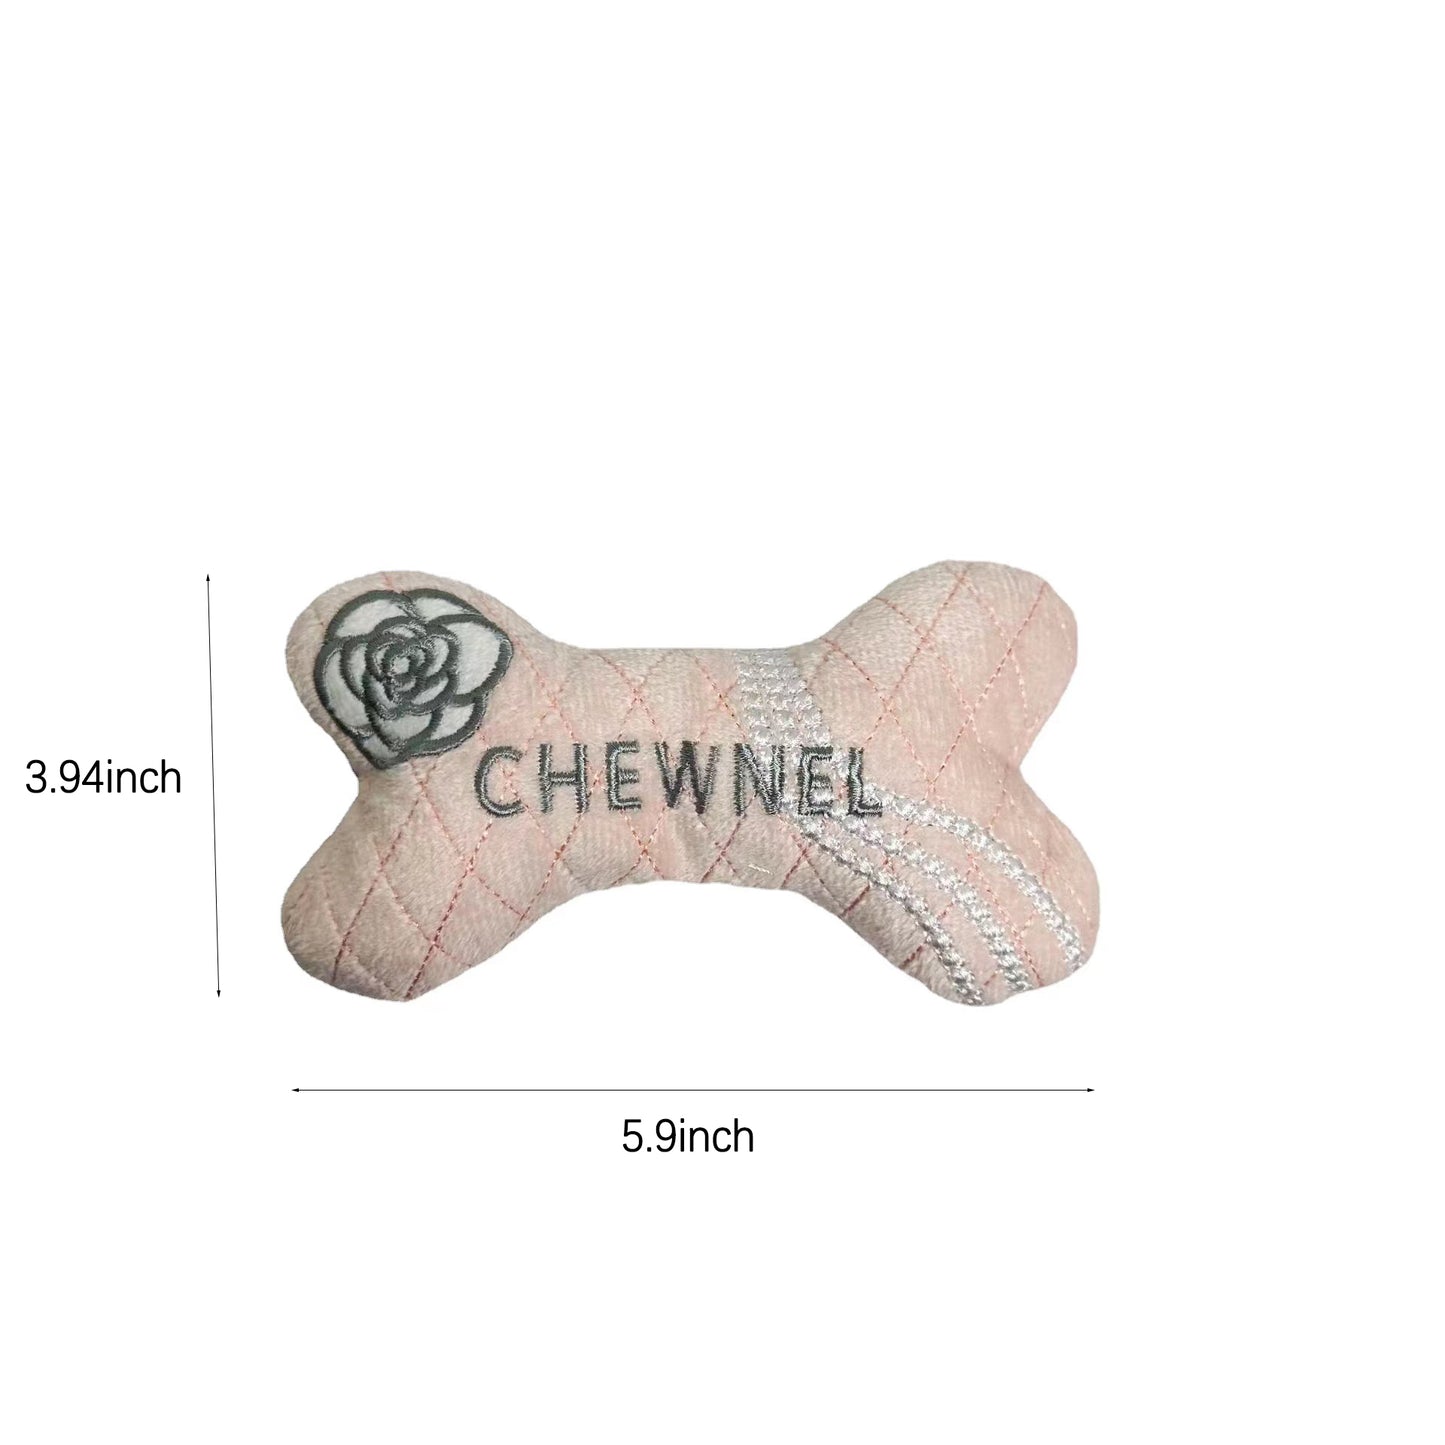 Chewnel Pink Bone Toy